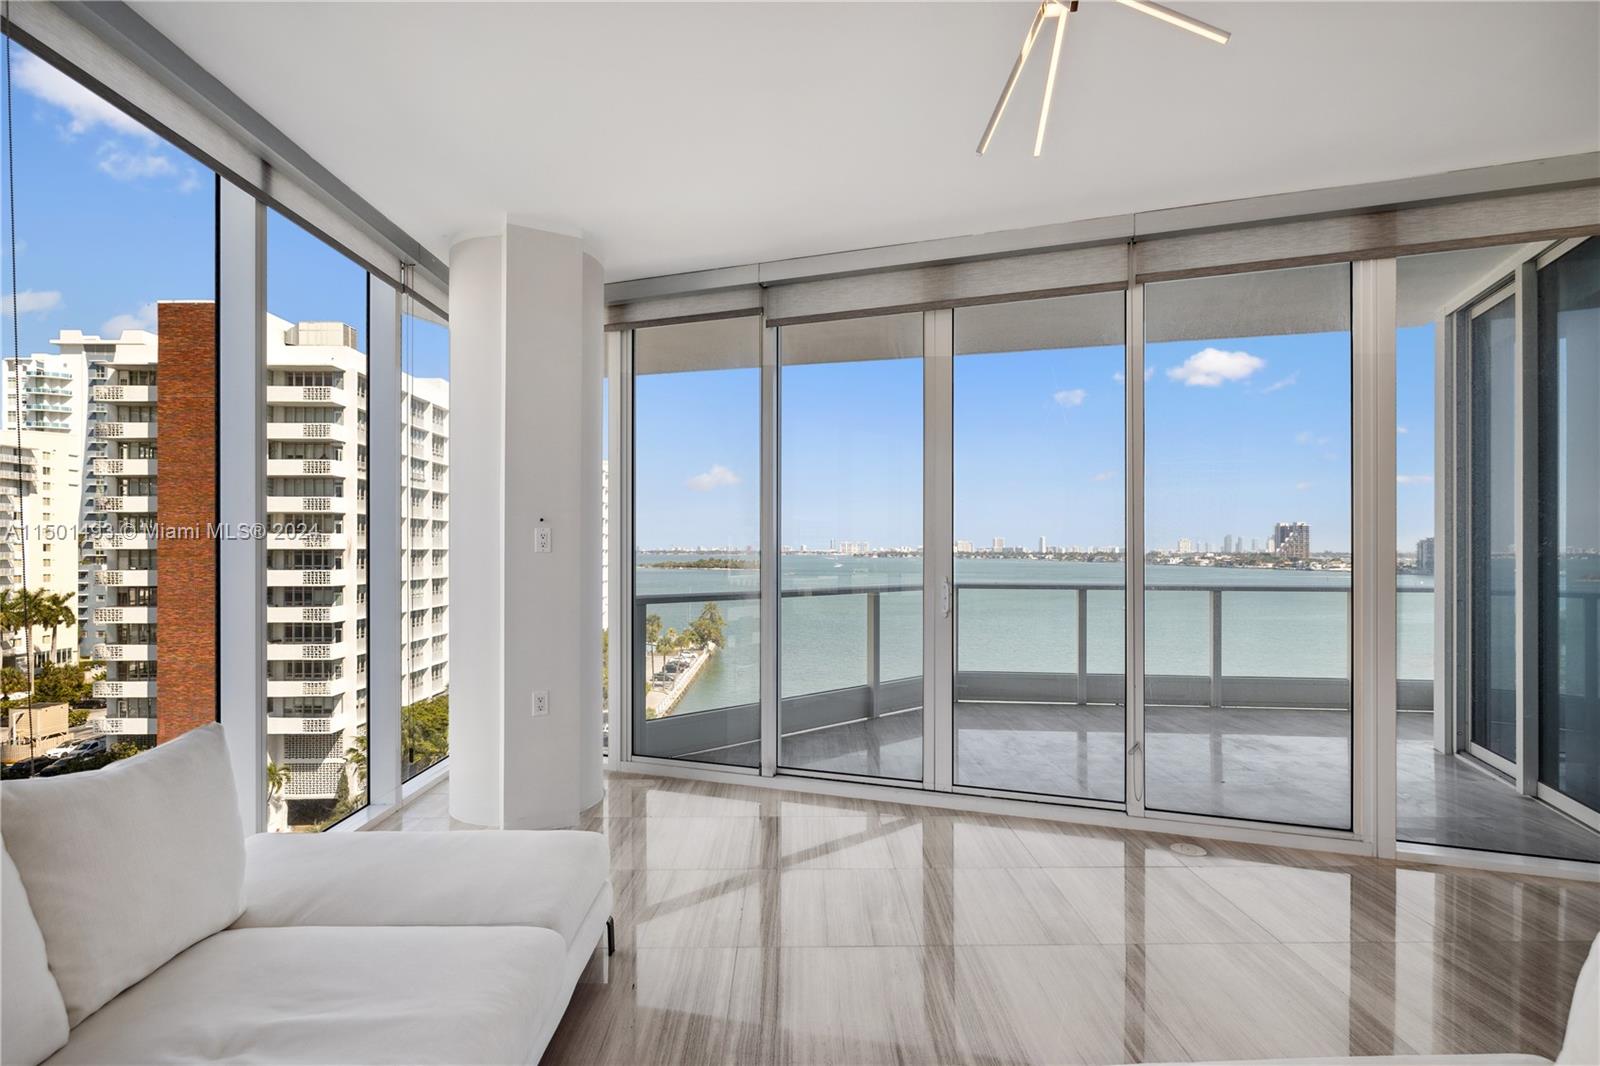 Property for Sale at 2020 N Bayshore Dr 801, Miami, Broward County, Florida - Bedrooms: 2 
Bathrooms: 3  - $950,000